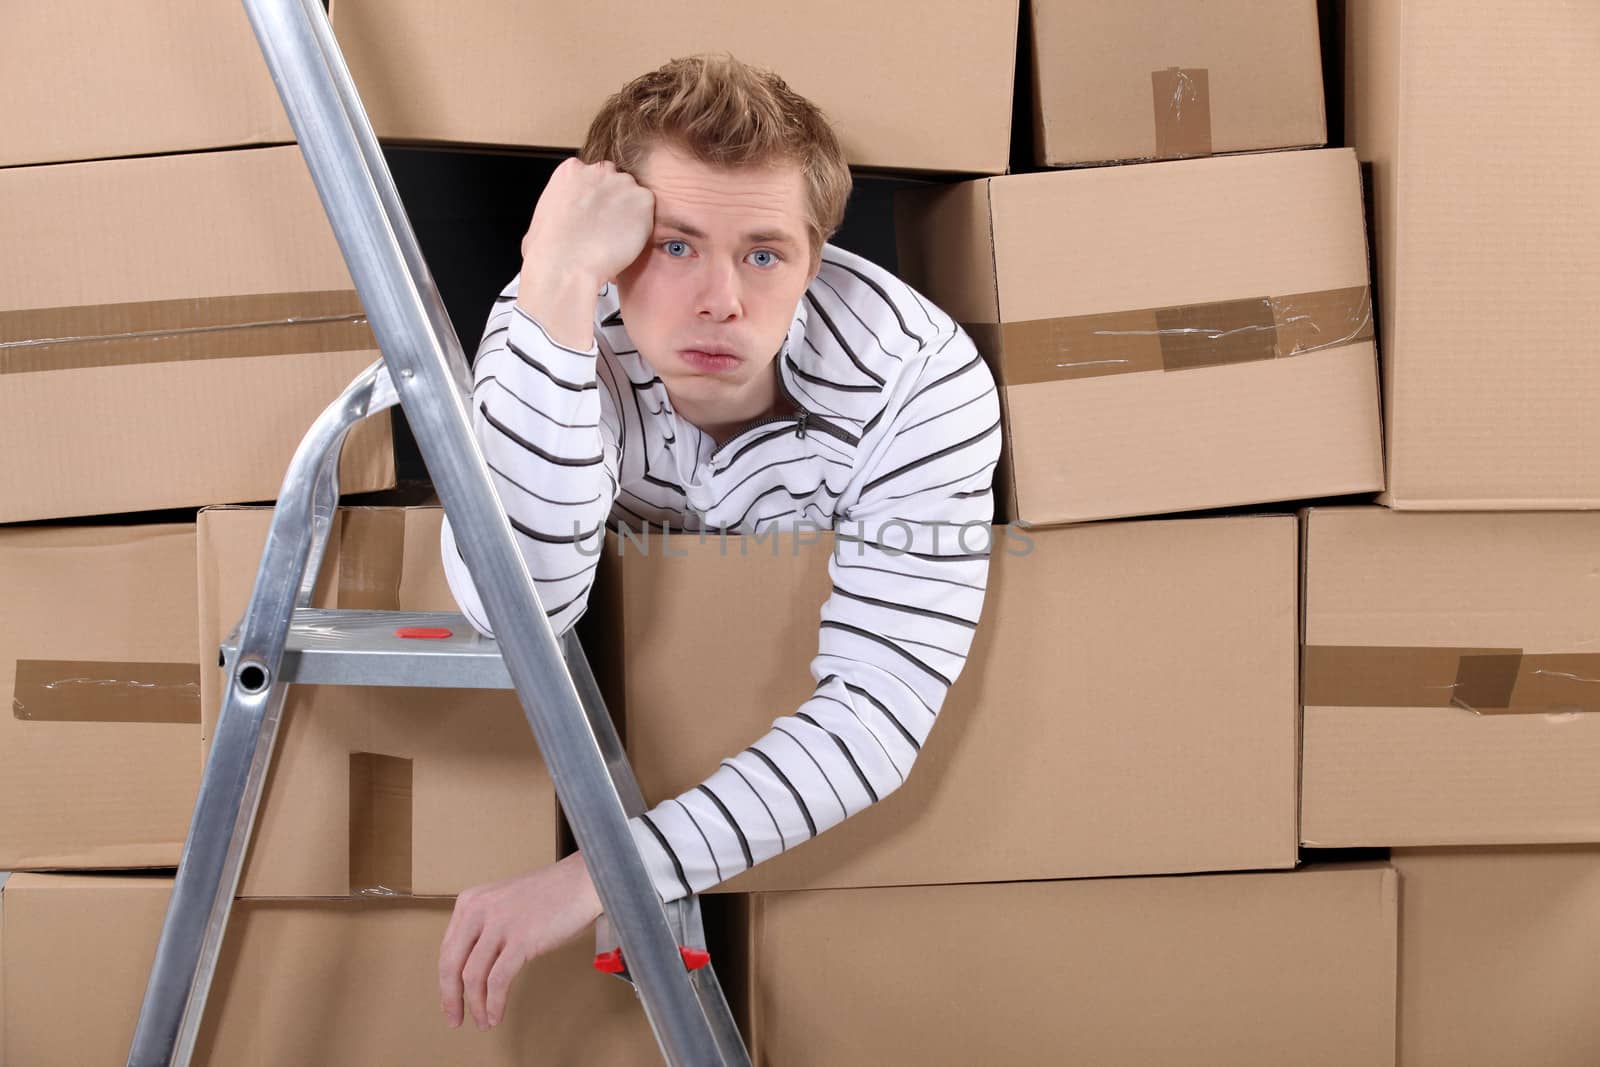 Man stuck behind stacks of cardboard boxes by phovoir